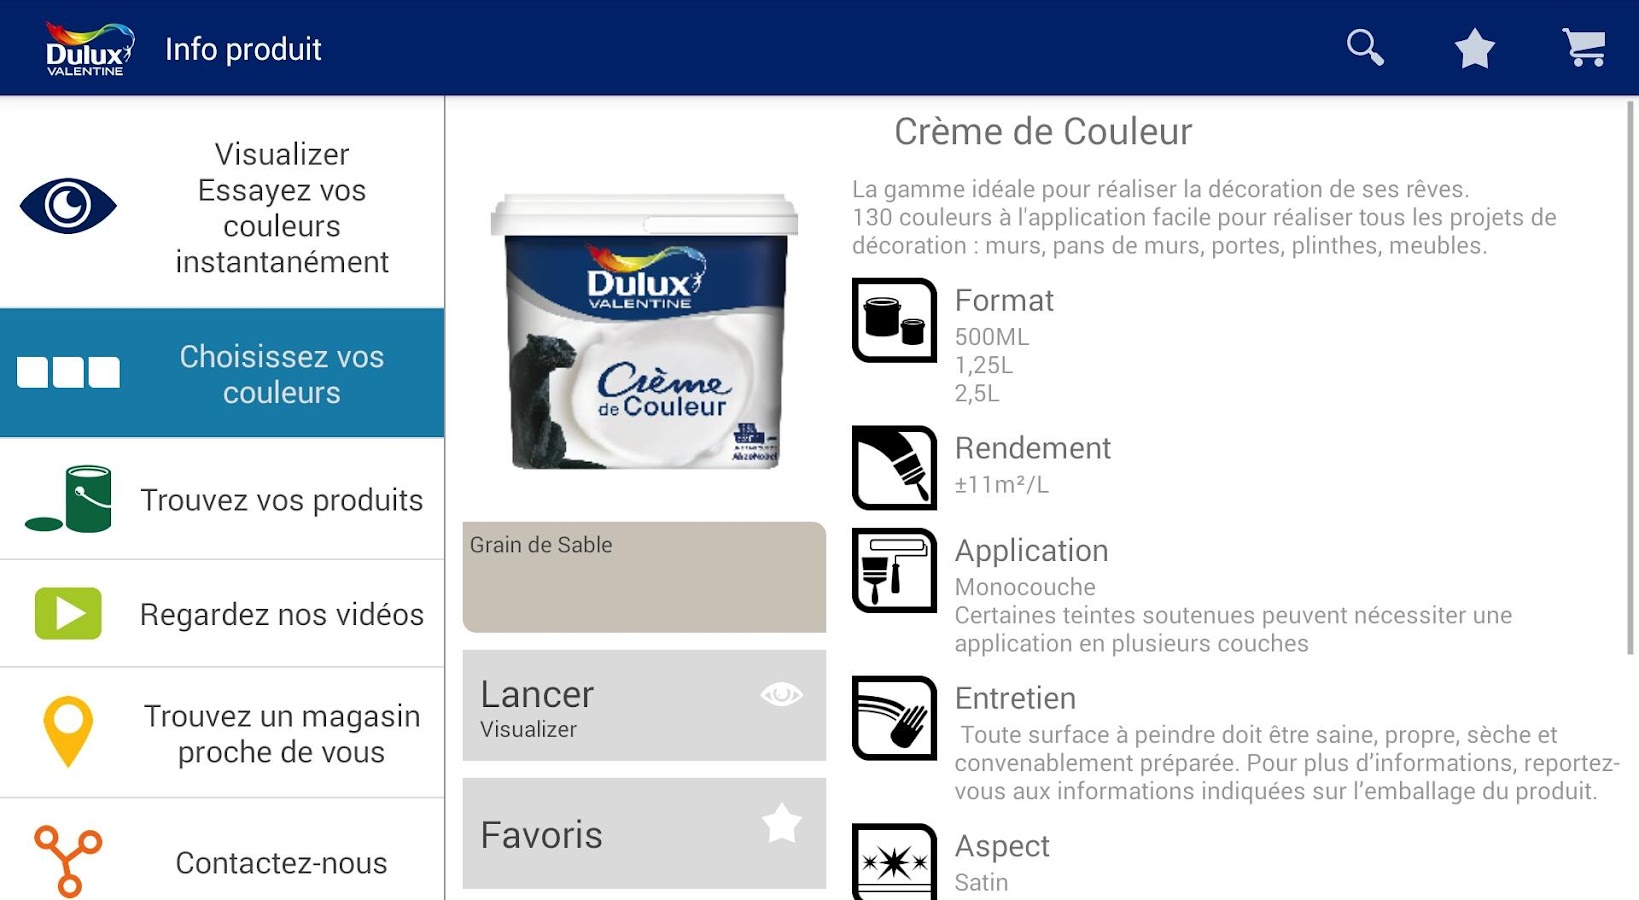  Dulux Valentine Visualizer Applications Android sur 